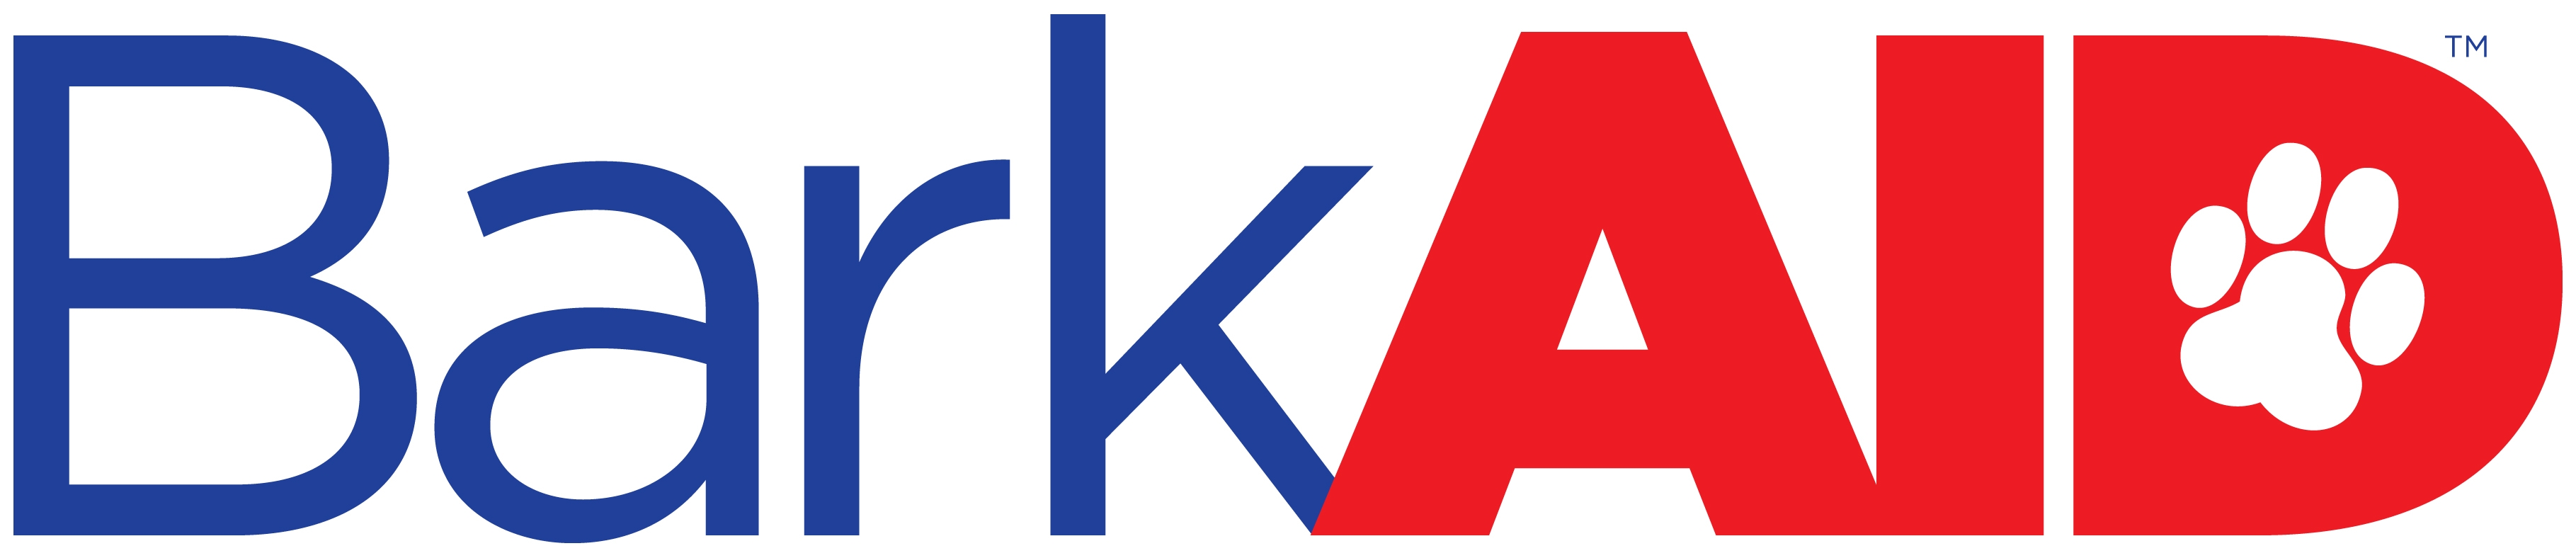 BarkAID_logo